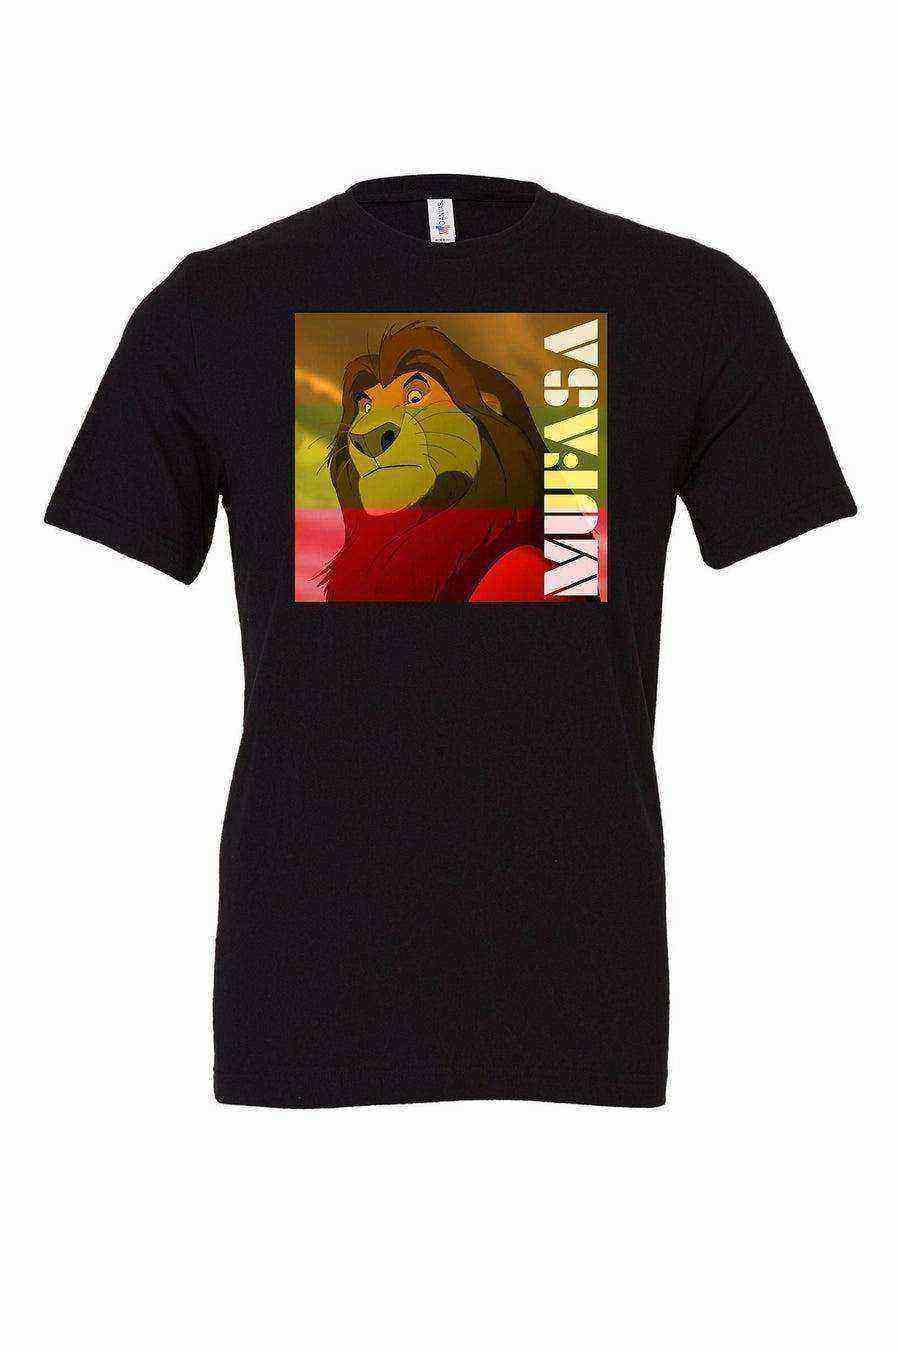 Youth | Mufasa Marley Shirt | Lion King Shirt - Dylan's Tees